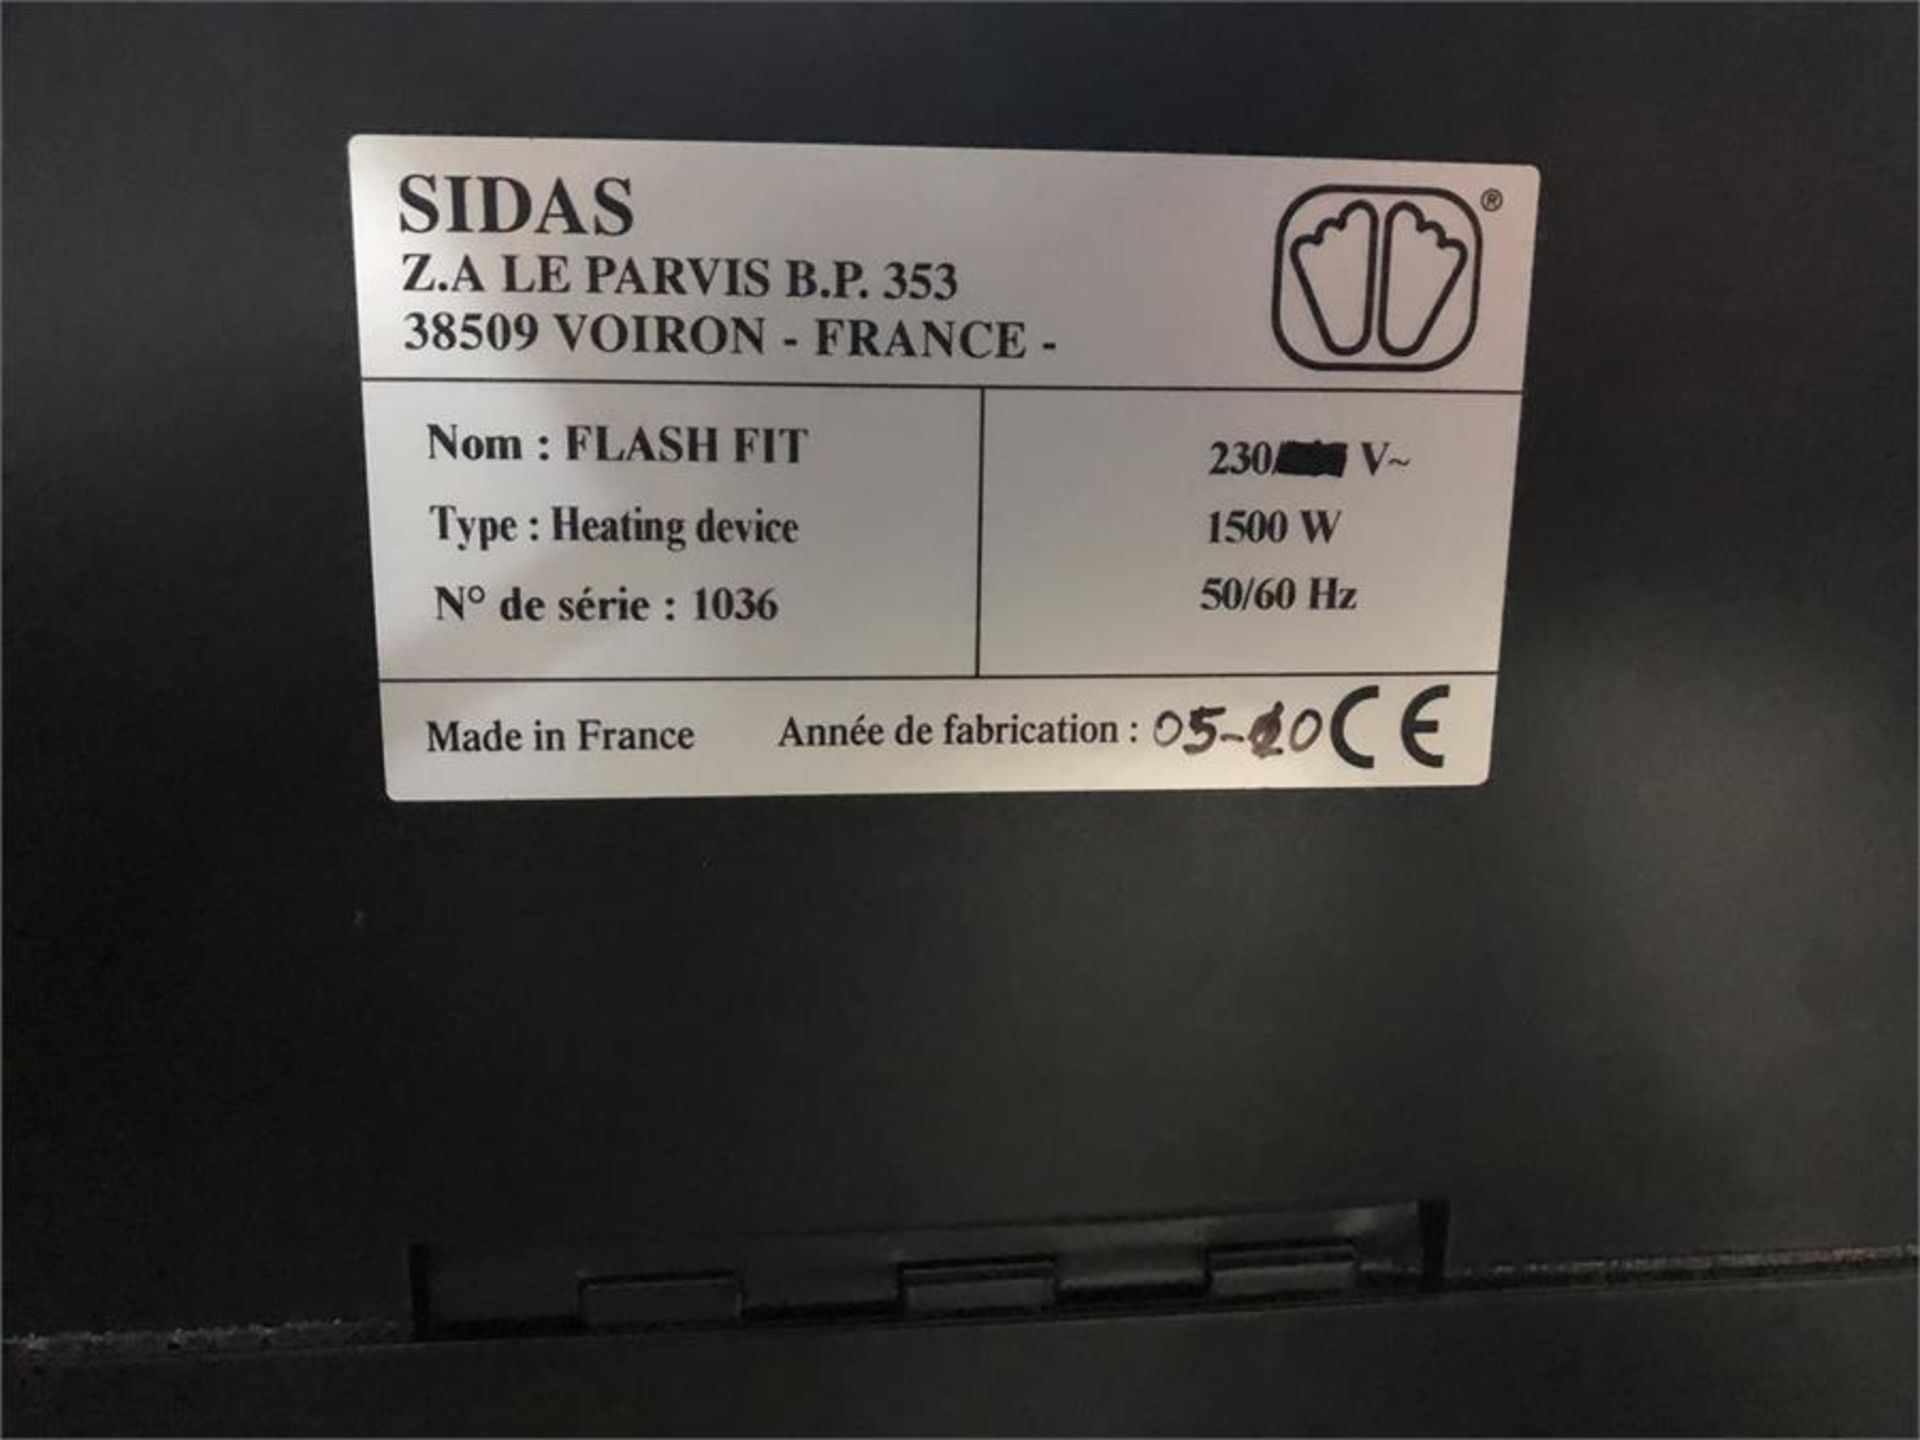 Fi'zi:k Sidas Flash Fit Heating Device EU Plug - Image 3 of 3